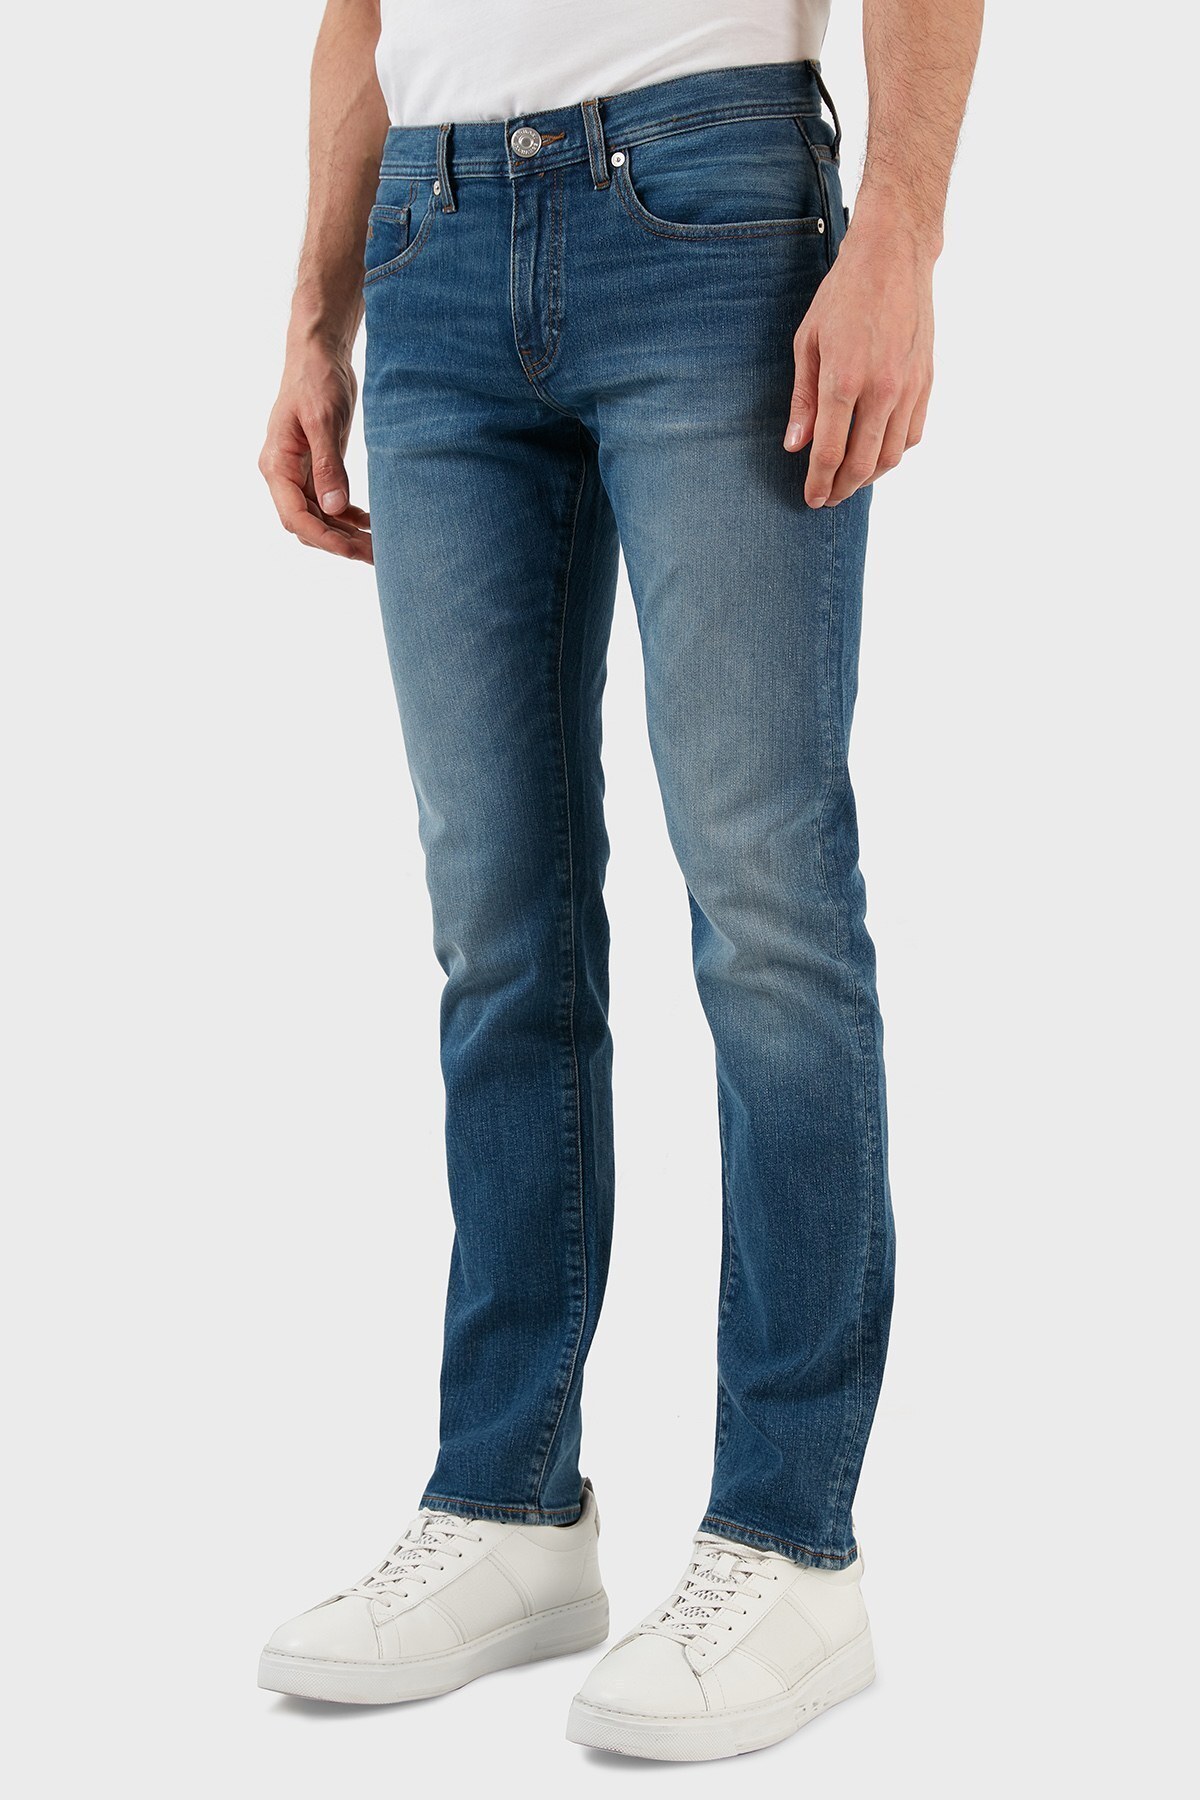 Armani Exchage Pamuklu Normal Bel Slim Fit J13 Jeans Erkek Kot Pantolon 6KZJ13 Z1P4Z 1500 MAVİ